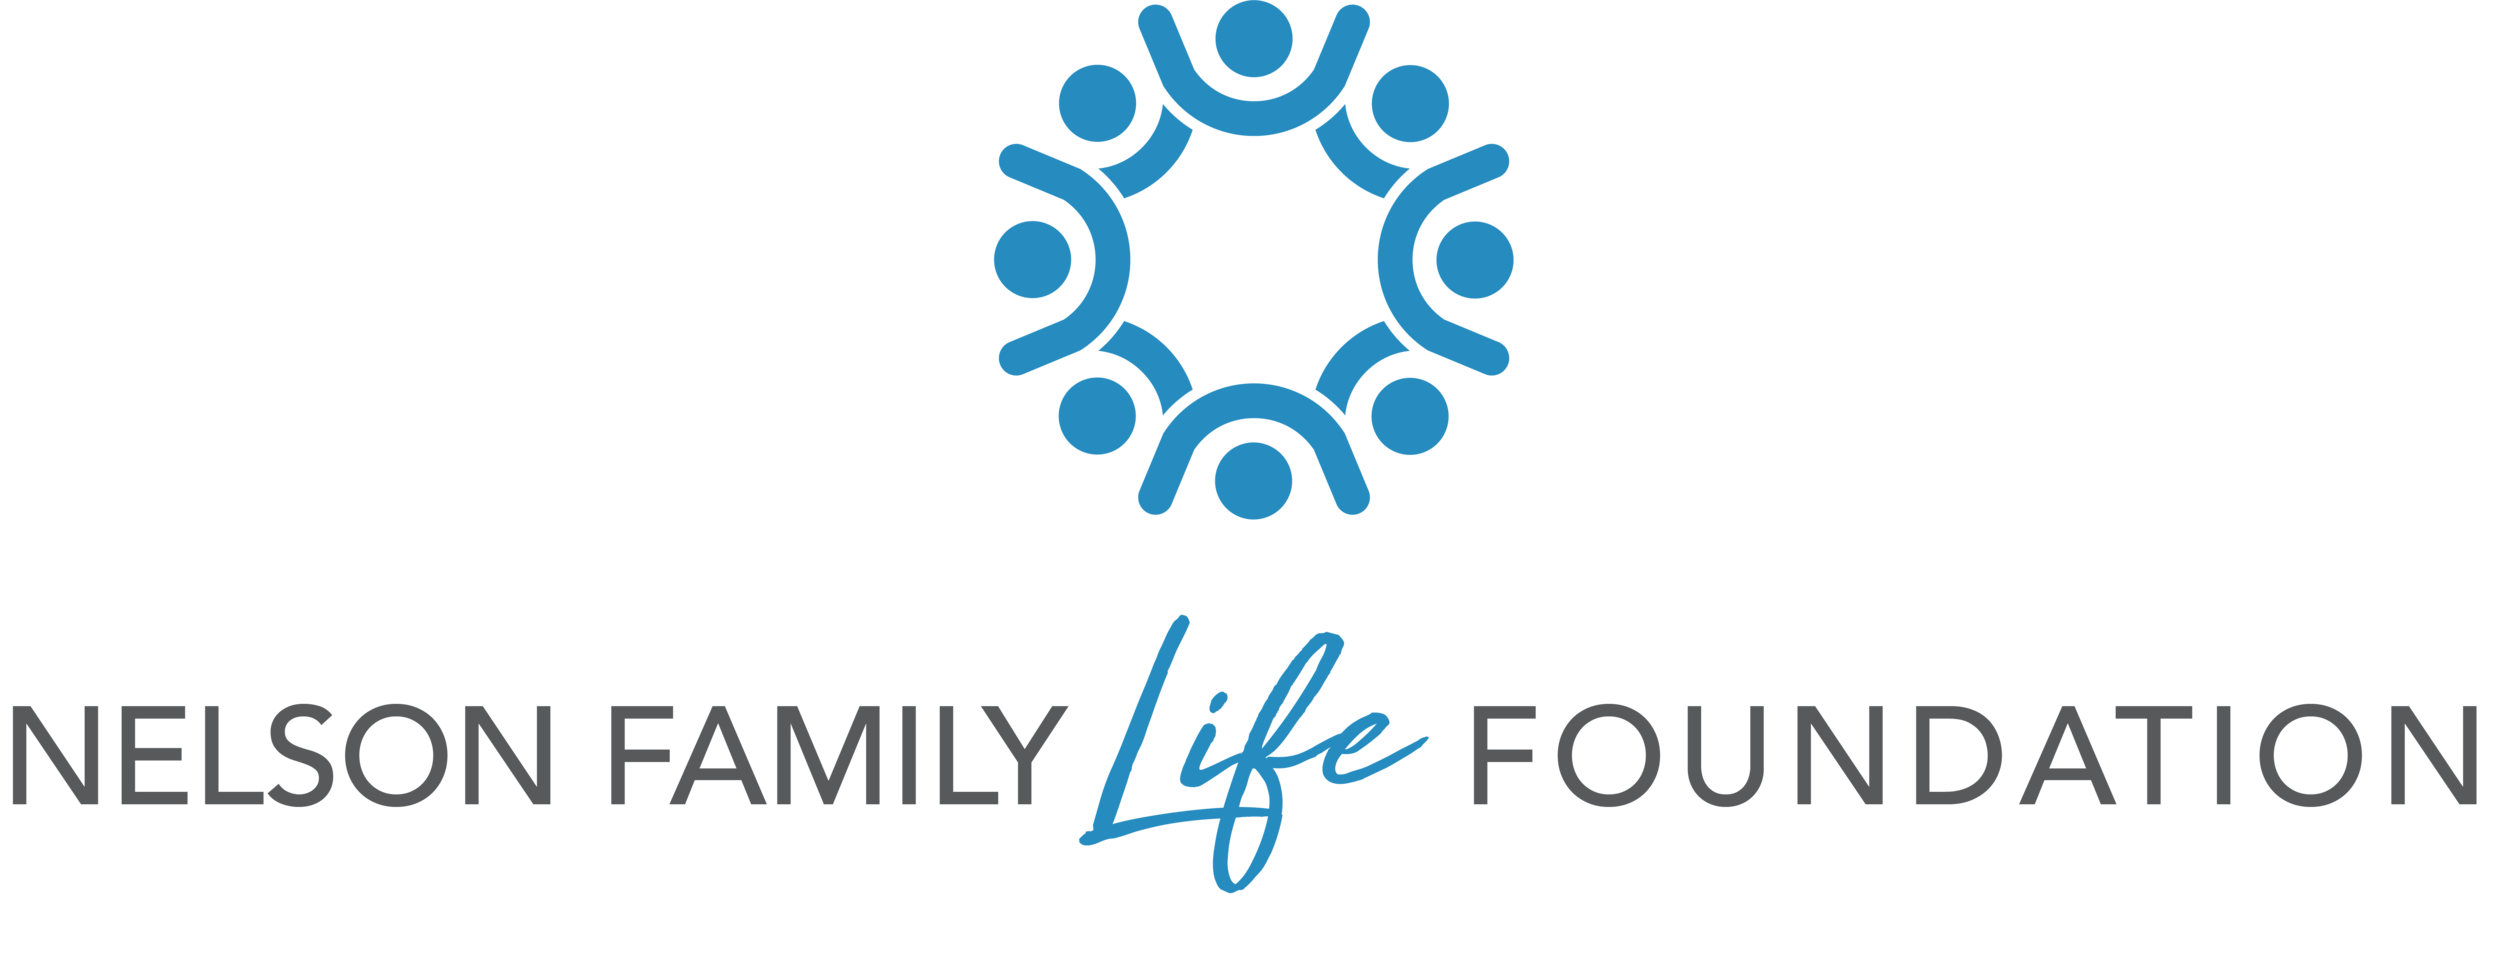 Nelson Family Life Foundation, Inc.